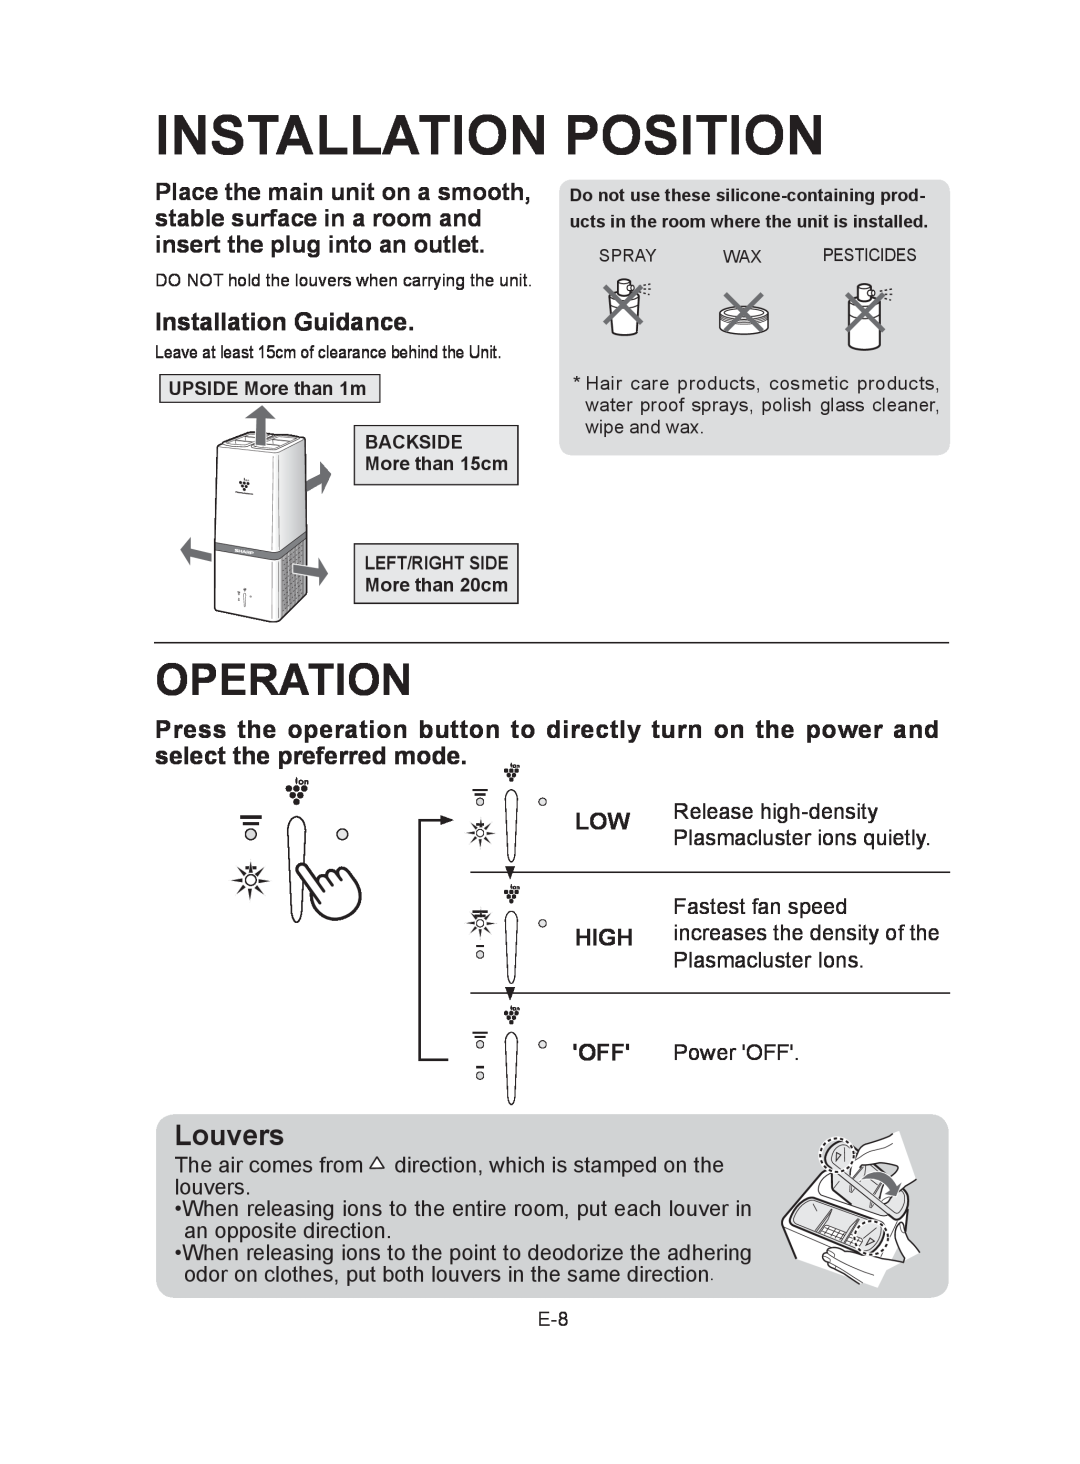 Sharp IG-A10U operation manual Installation Position, Operation, Louvers, Installation Guidance 